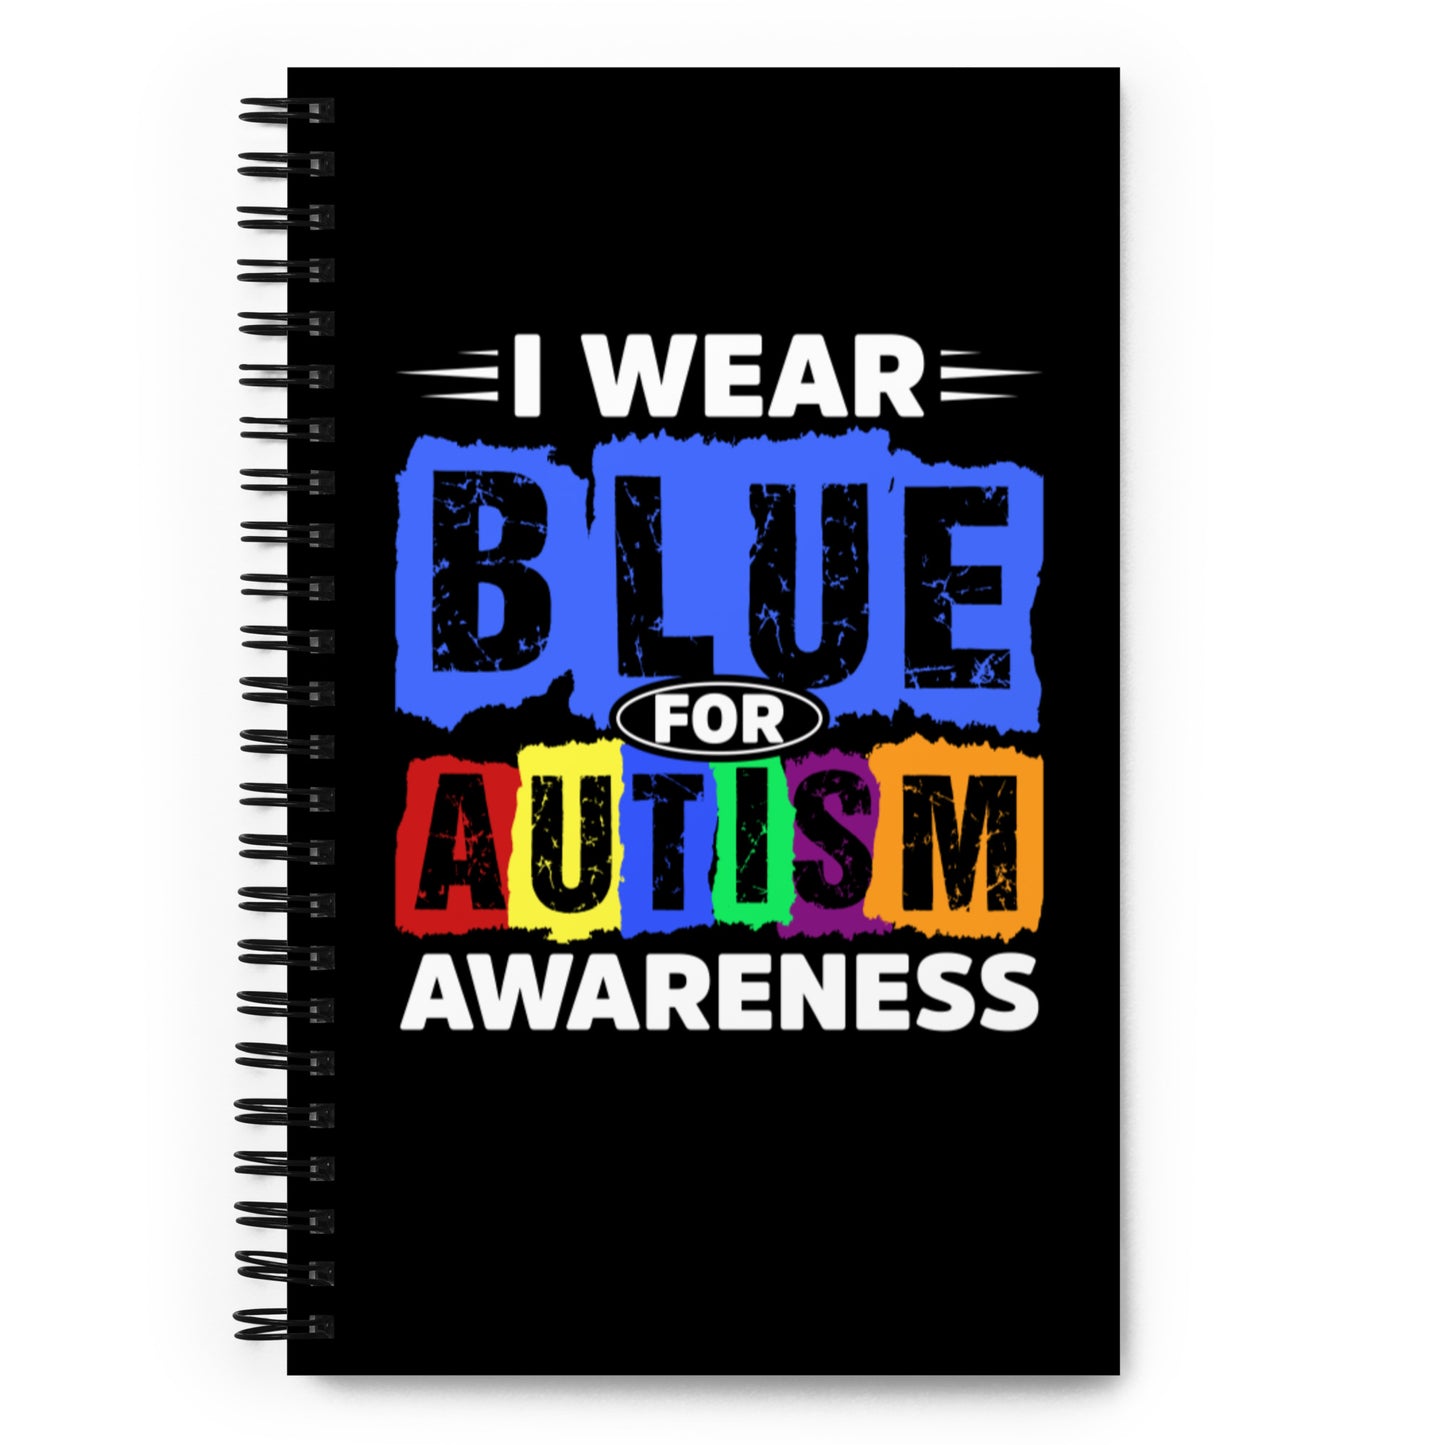 I Wear Blue for Autism Awareness Spiral notebook